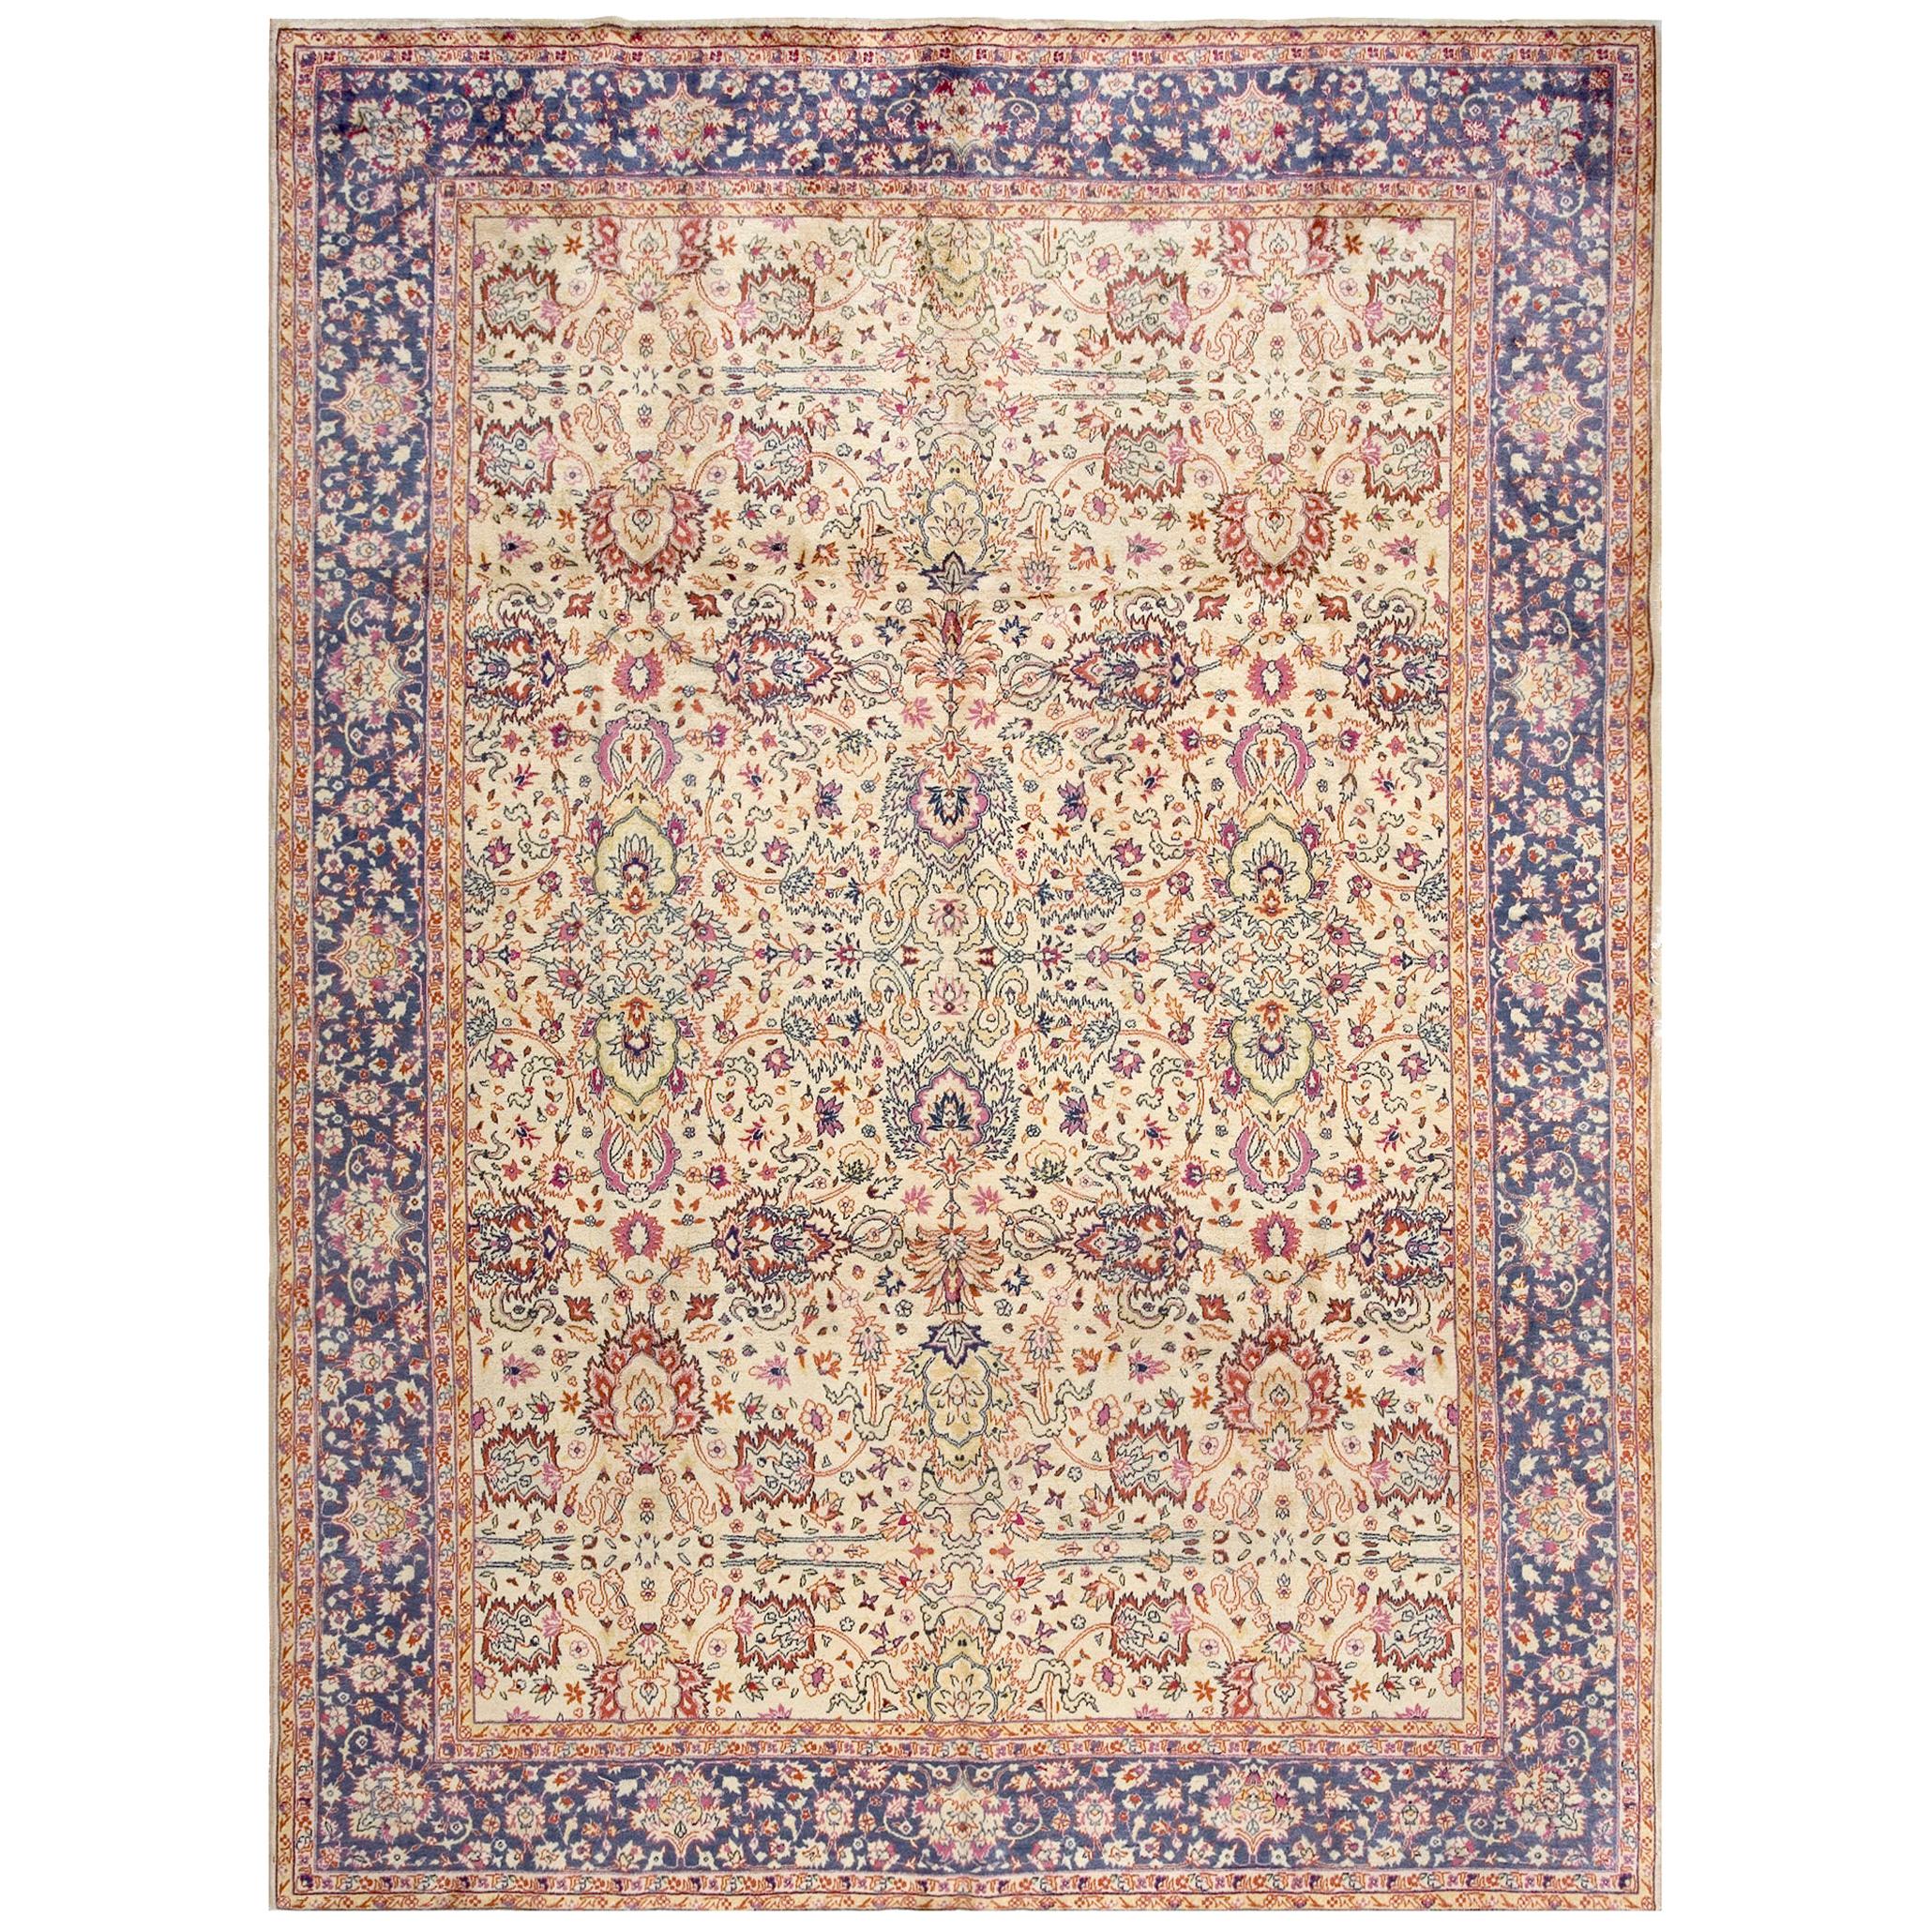 1930s Persian Tabriz Carpet ( 8'2" x 11'4" - 250 x 345 )